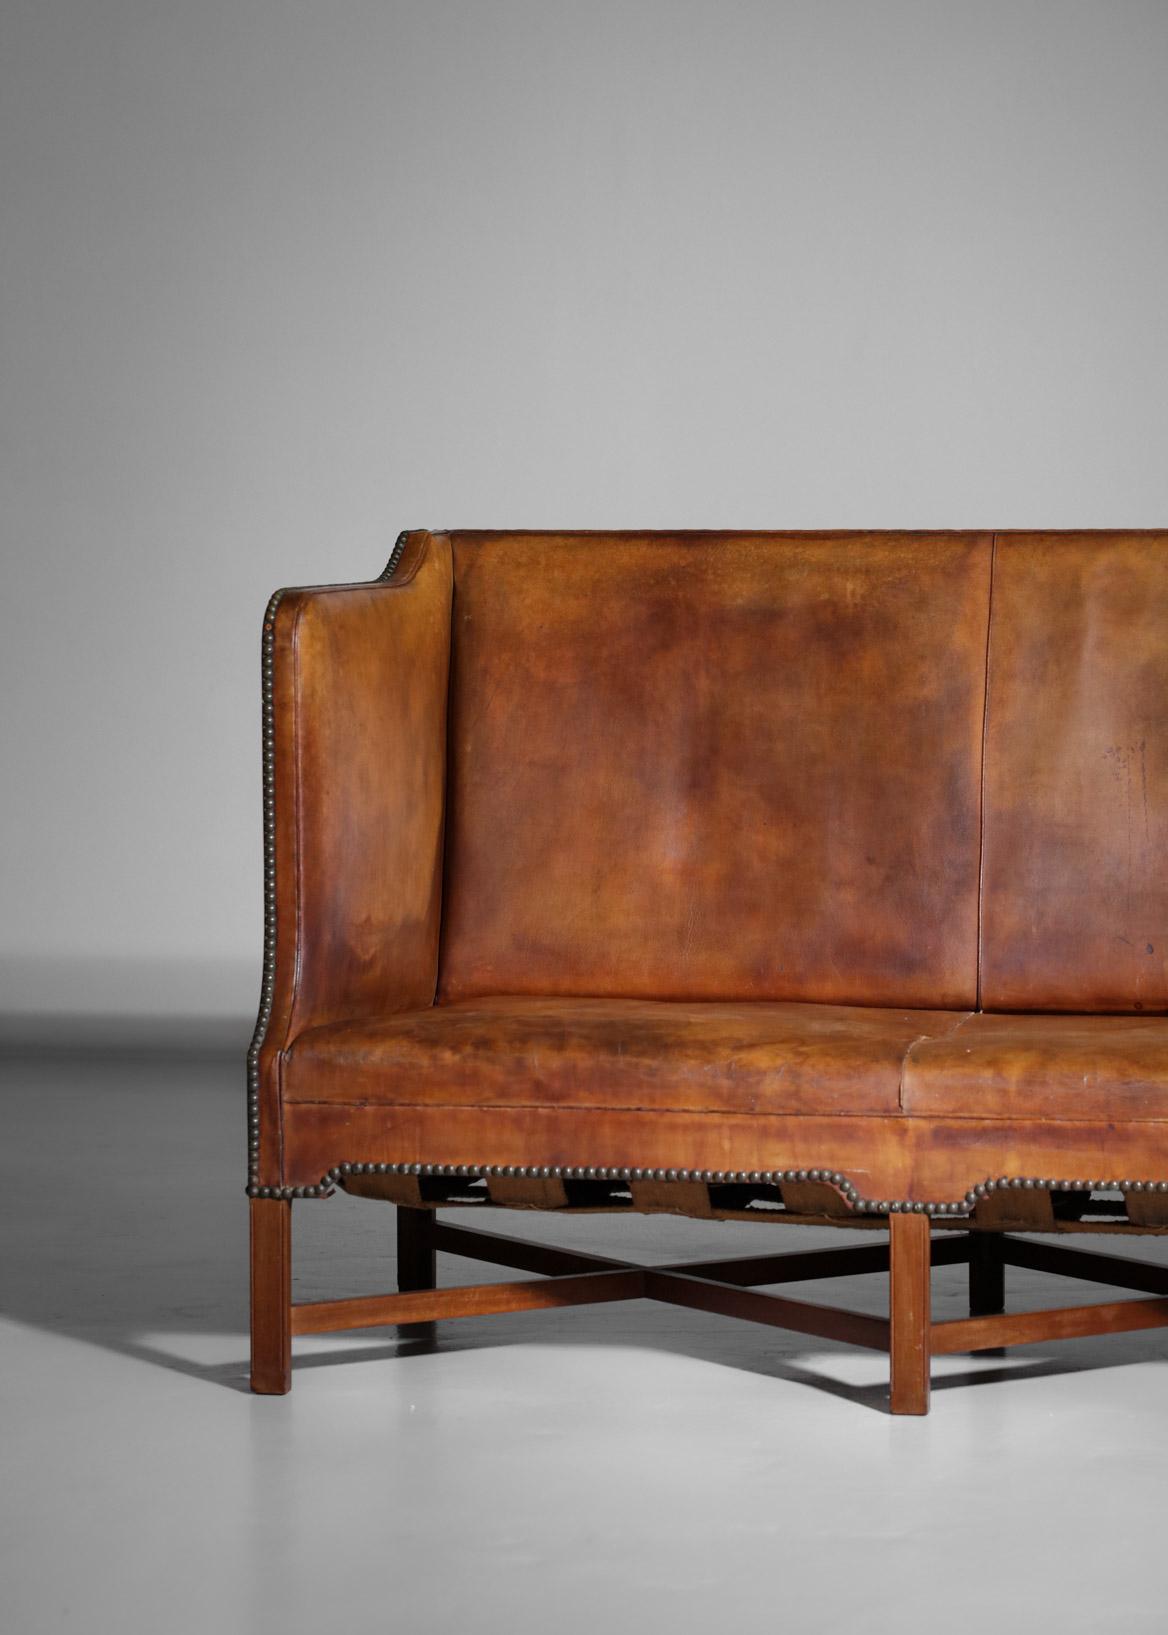 Three Seat Sofa by Danish Designer Kaare Klint Model 4118 for Rud Rasmussen 1